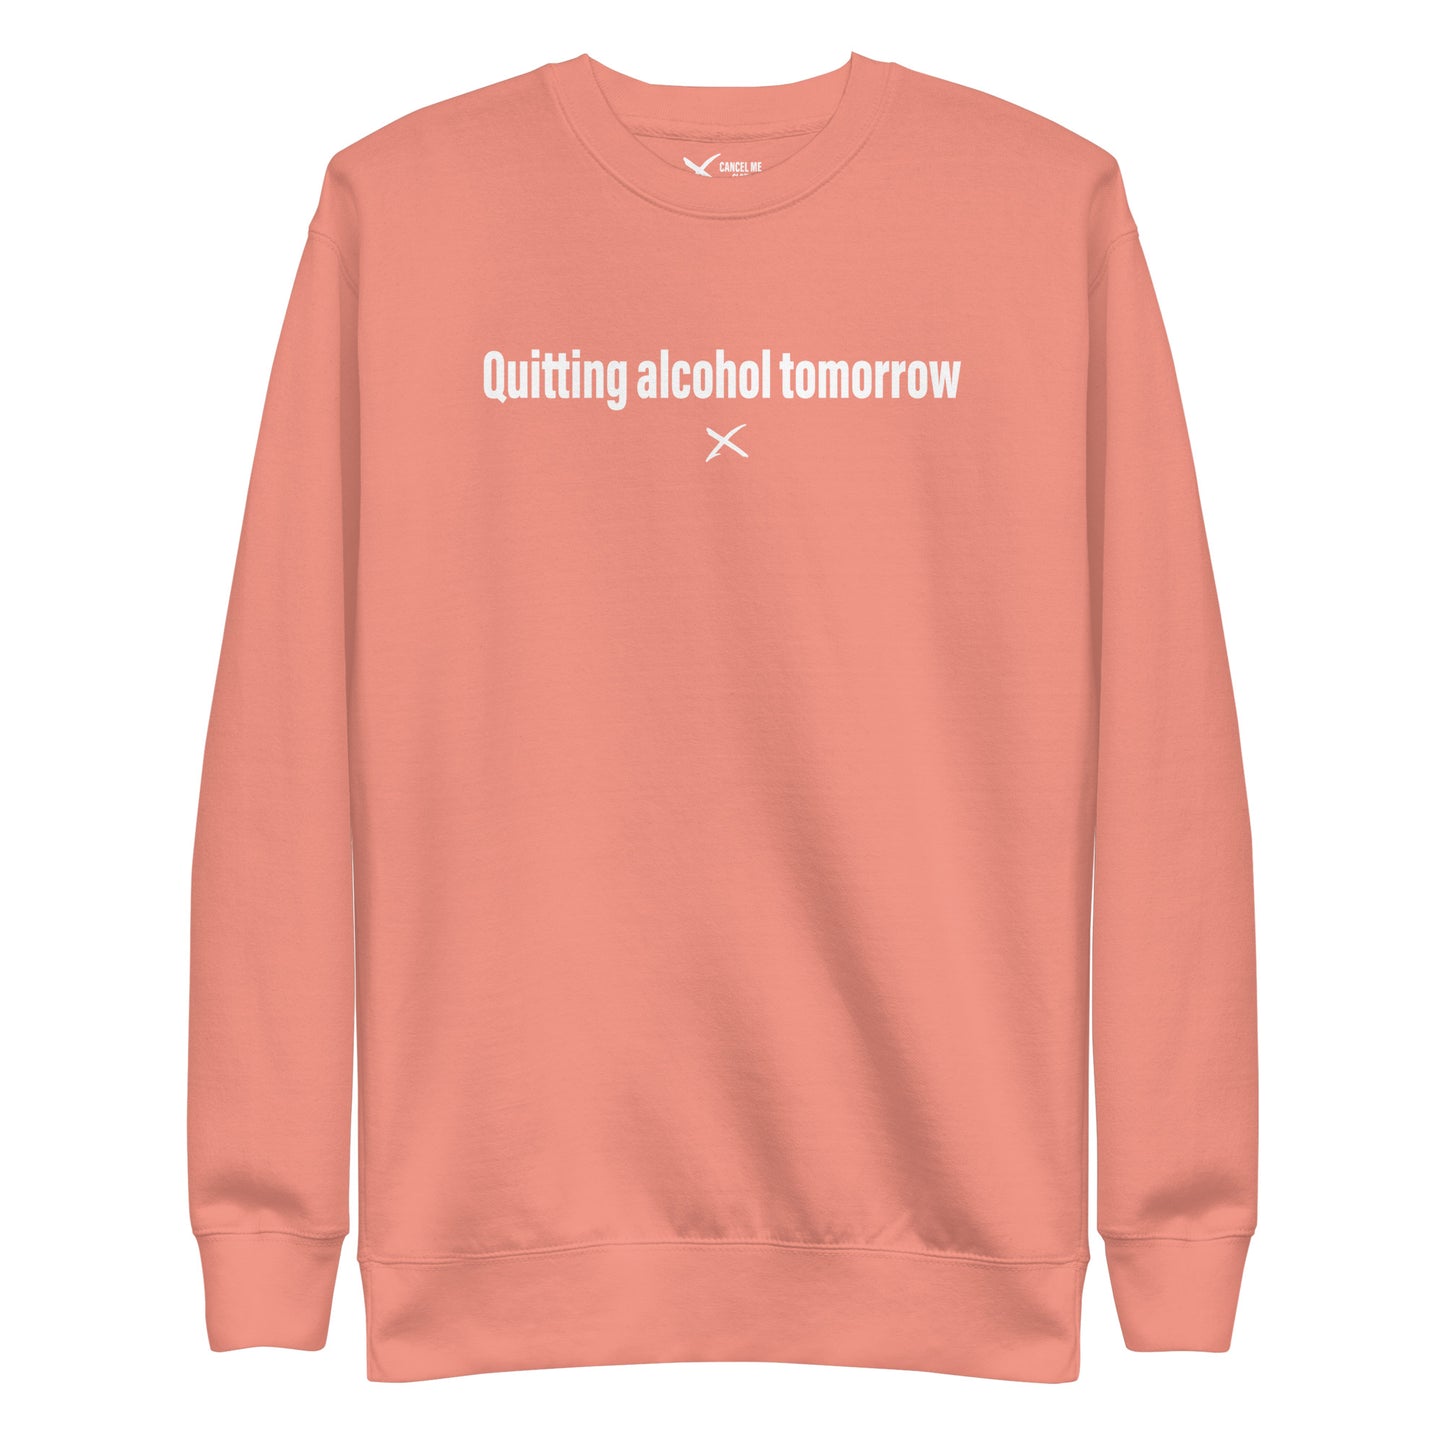 Quitting alcohol tomorrow - Sweatshirt